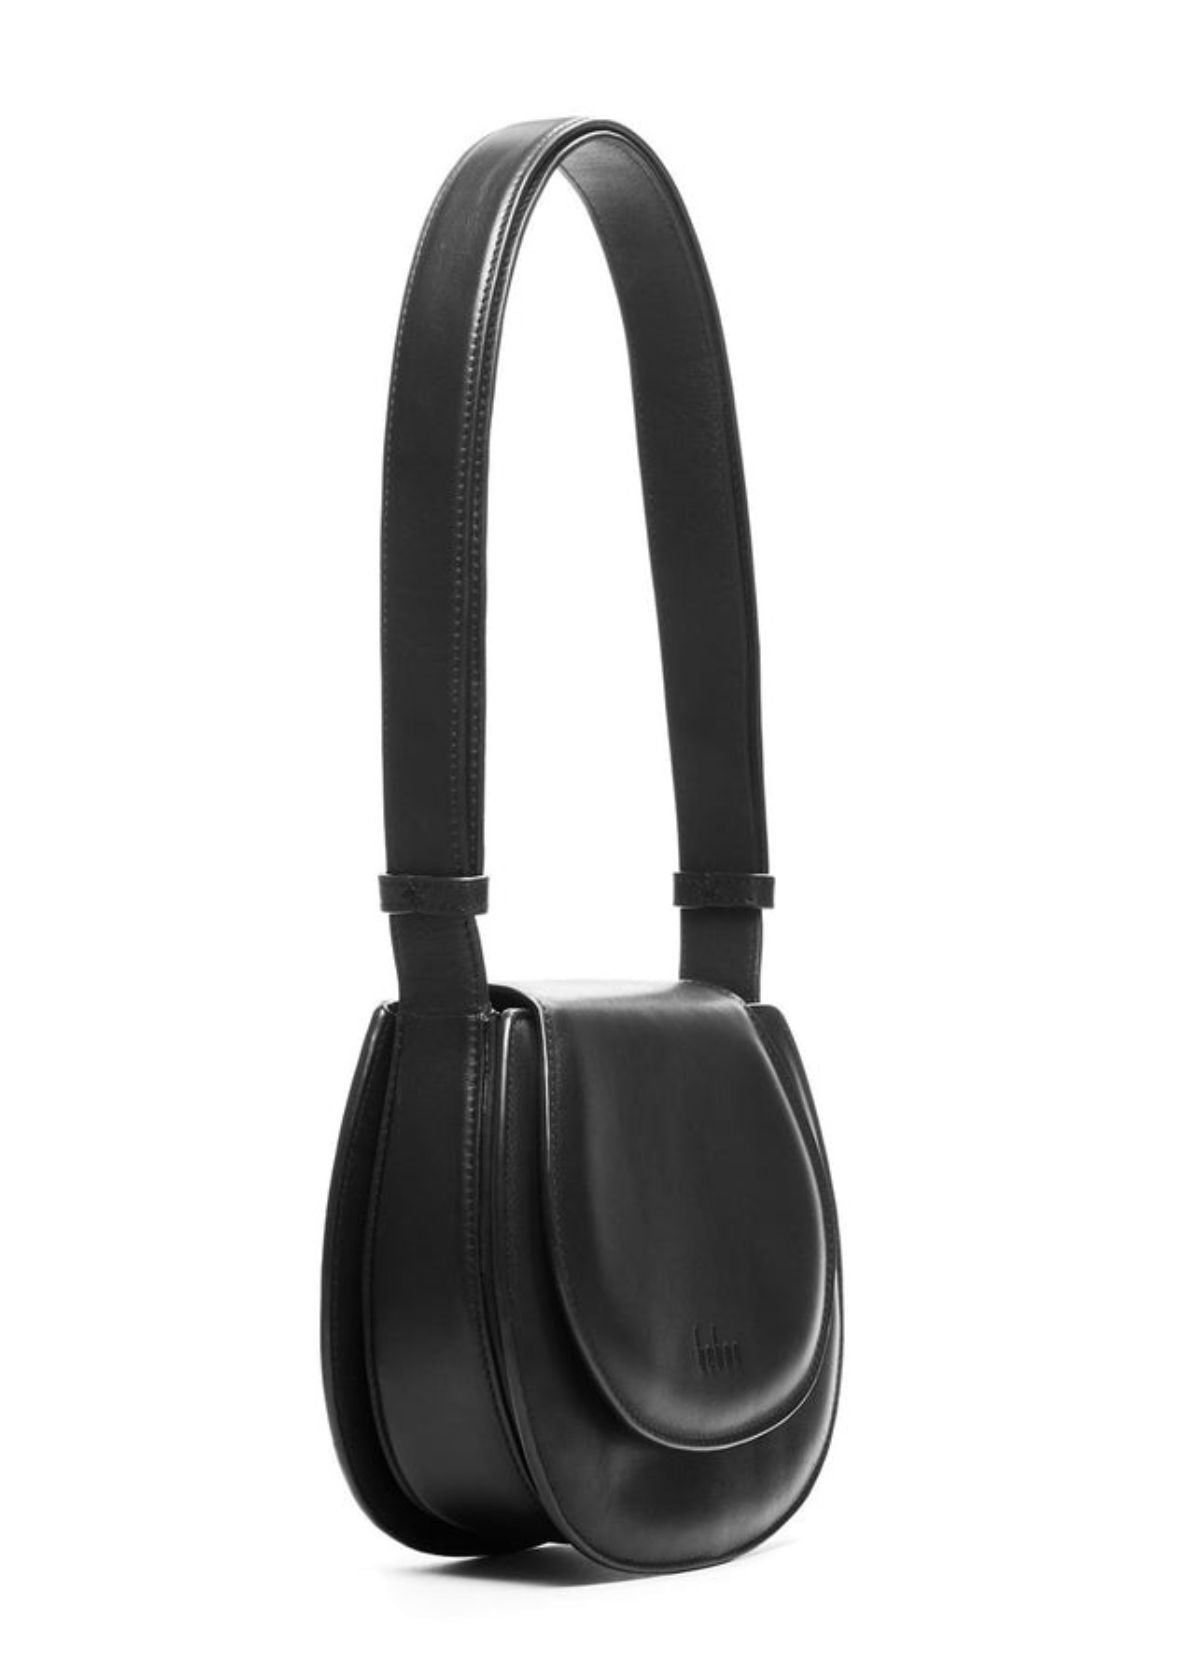 BEHNO Tilda Mini Saddle Bag Convertible Handbag - Black